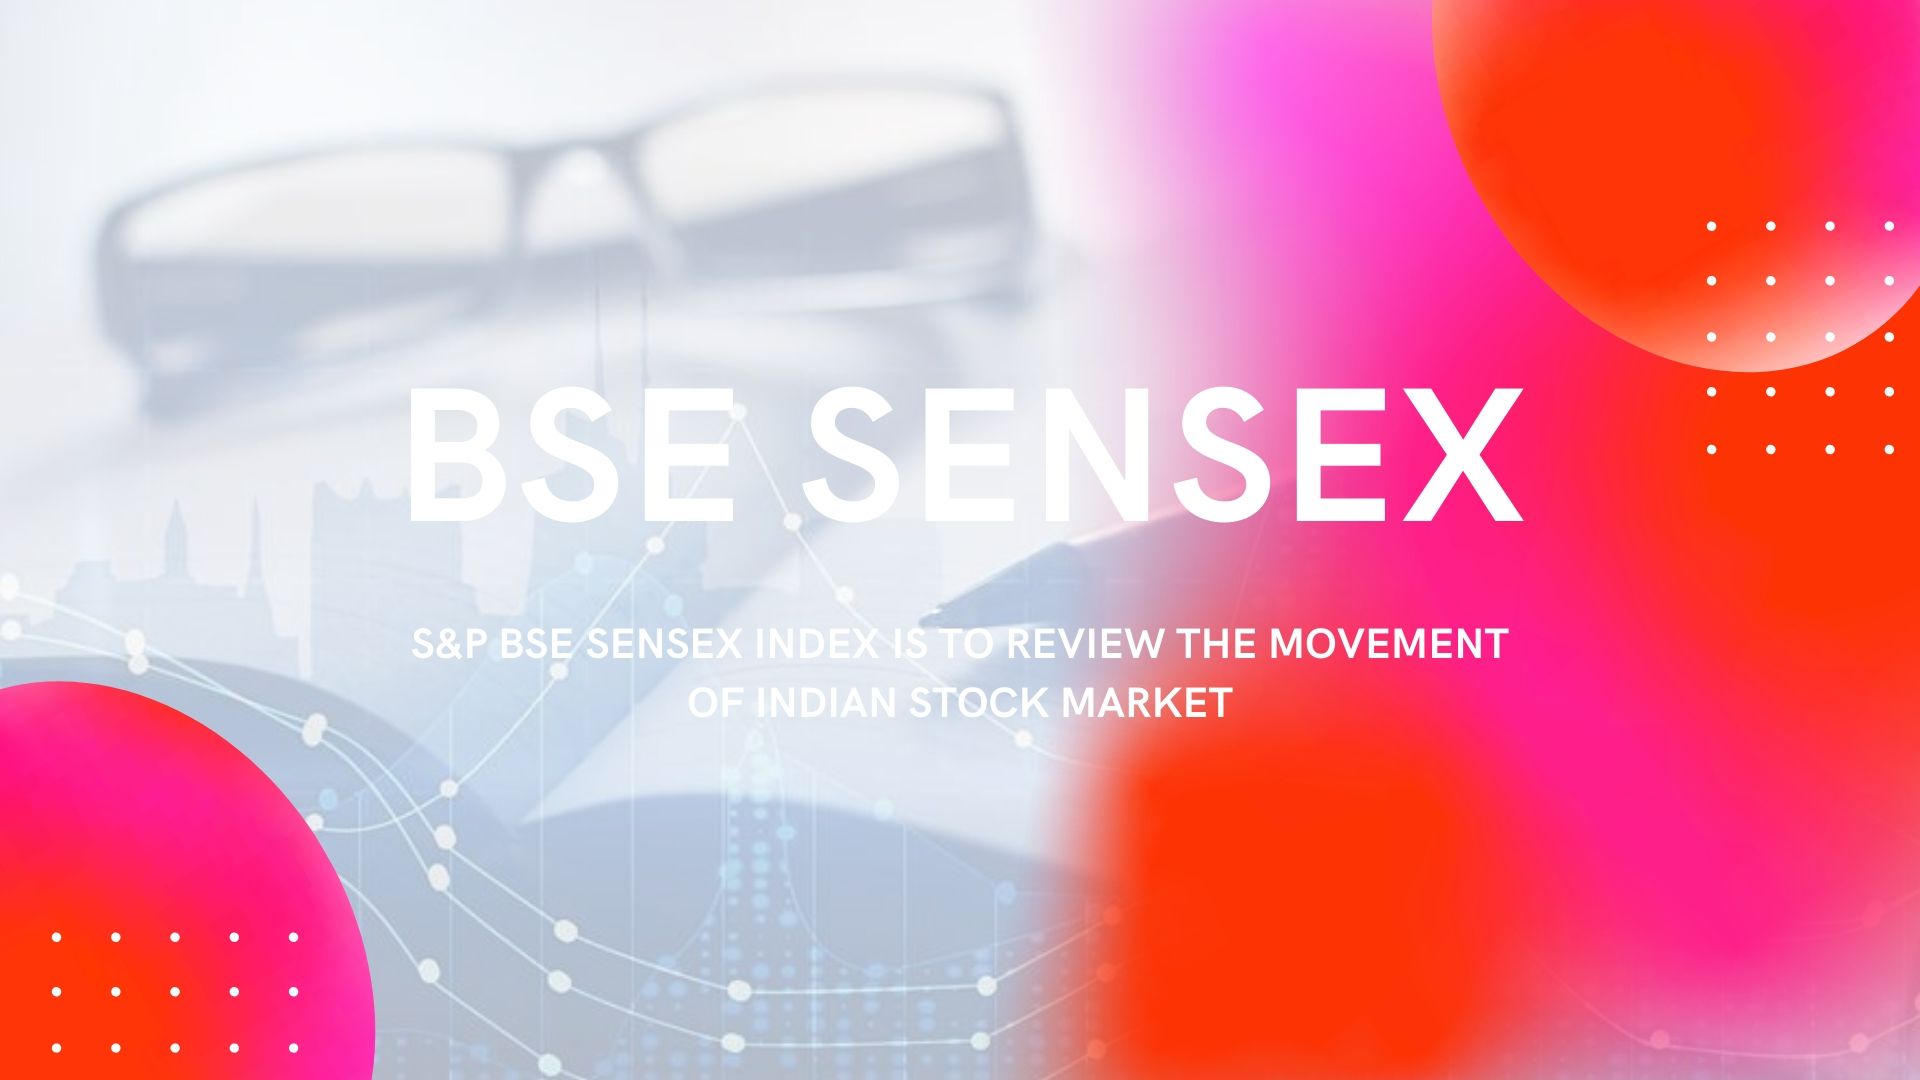 BSE SENSEX